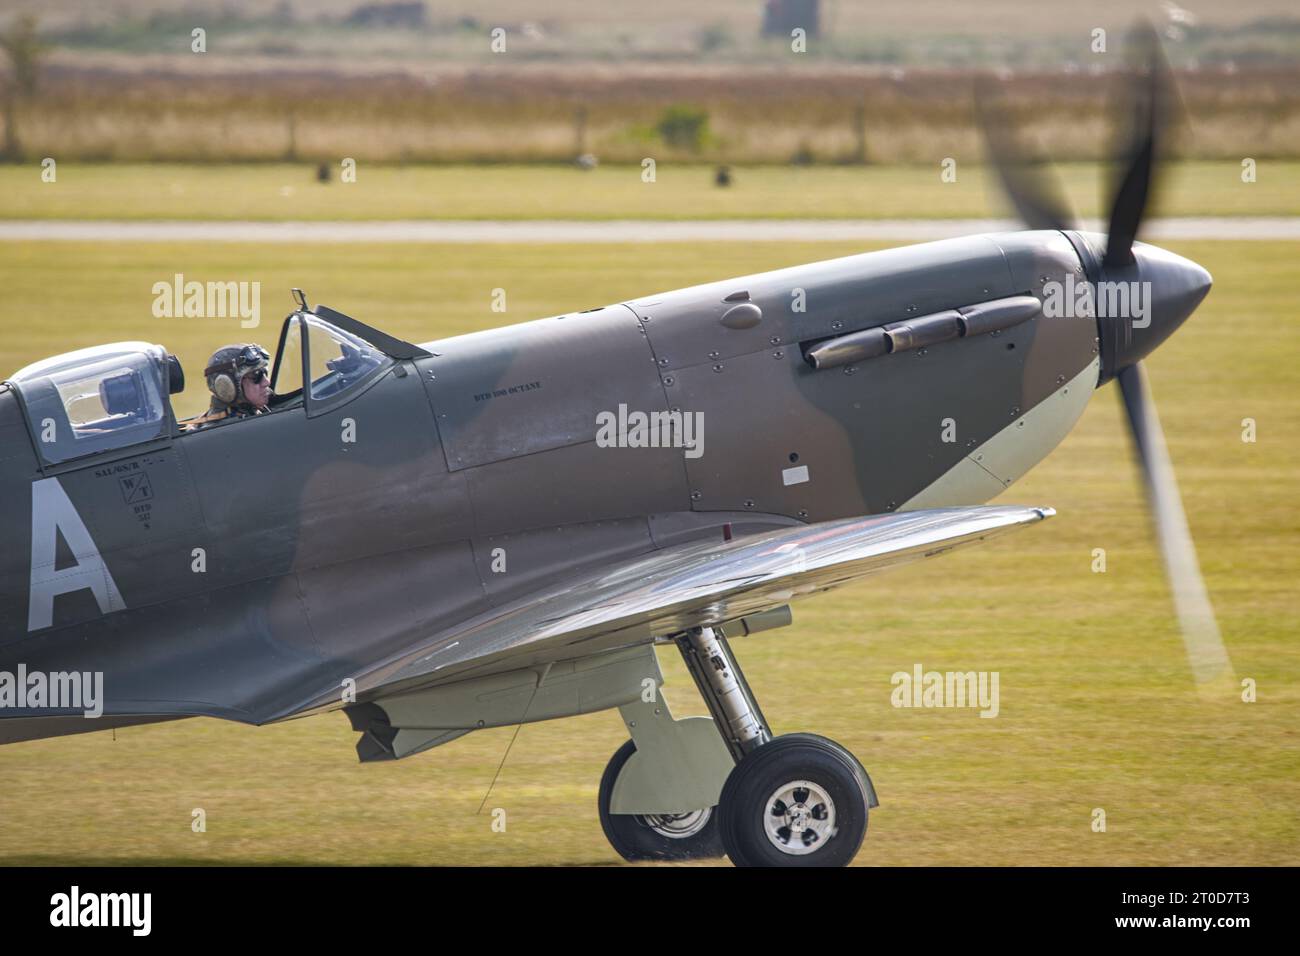 Warbird Airshow Duxford Stockfoto